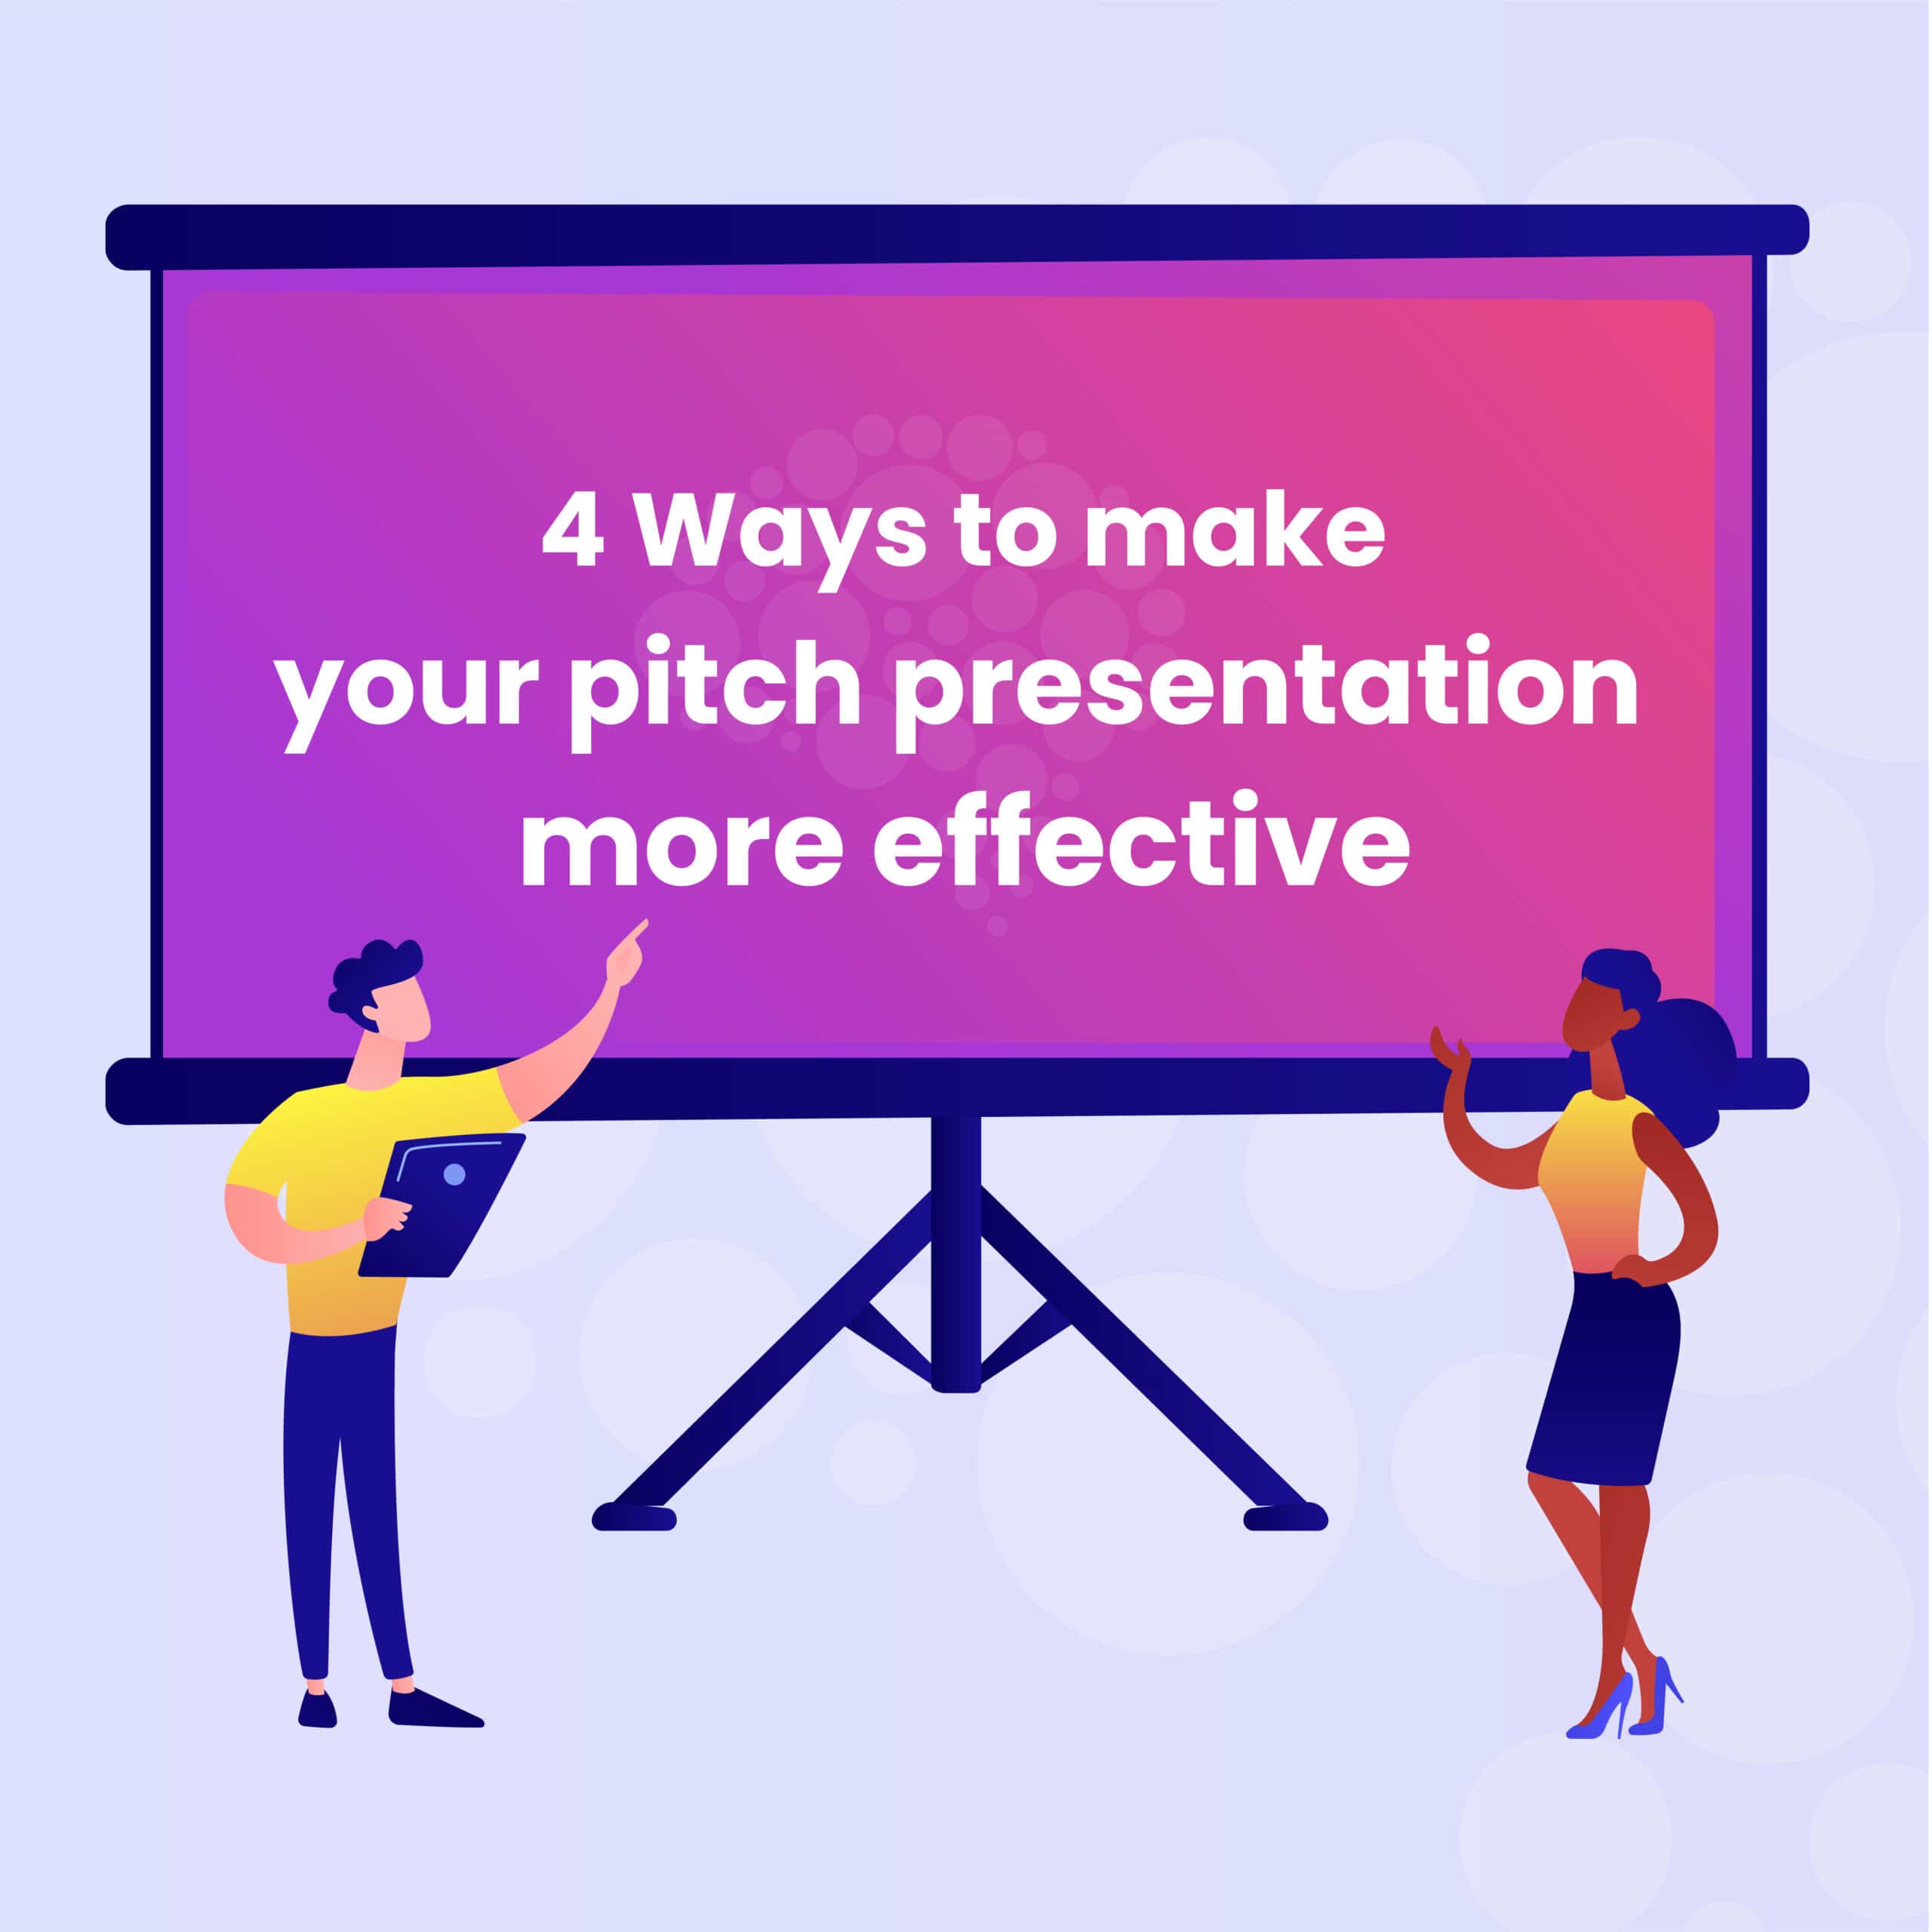 a good pitch presentation